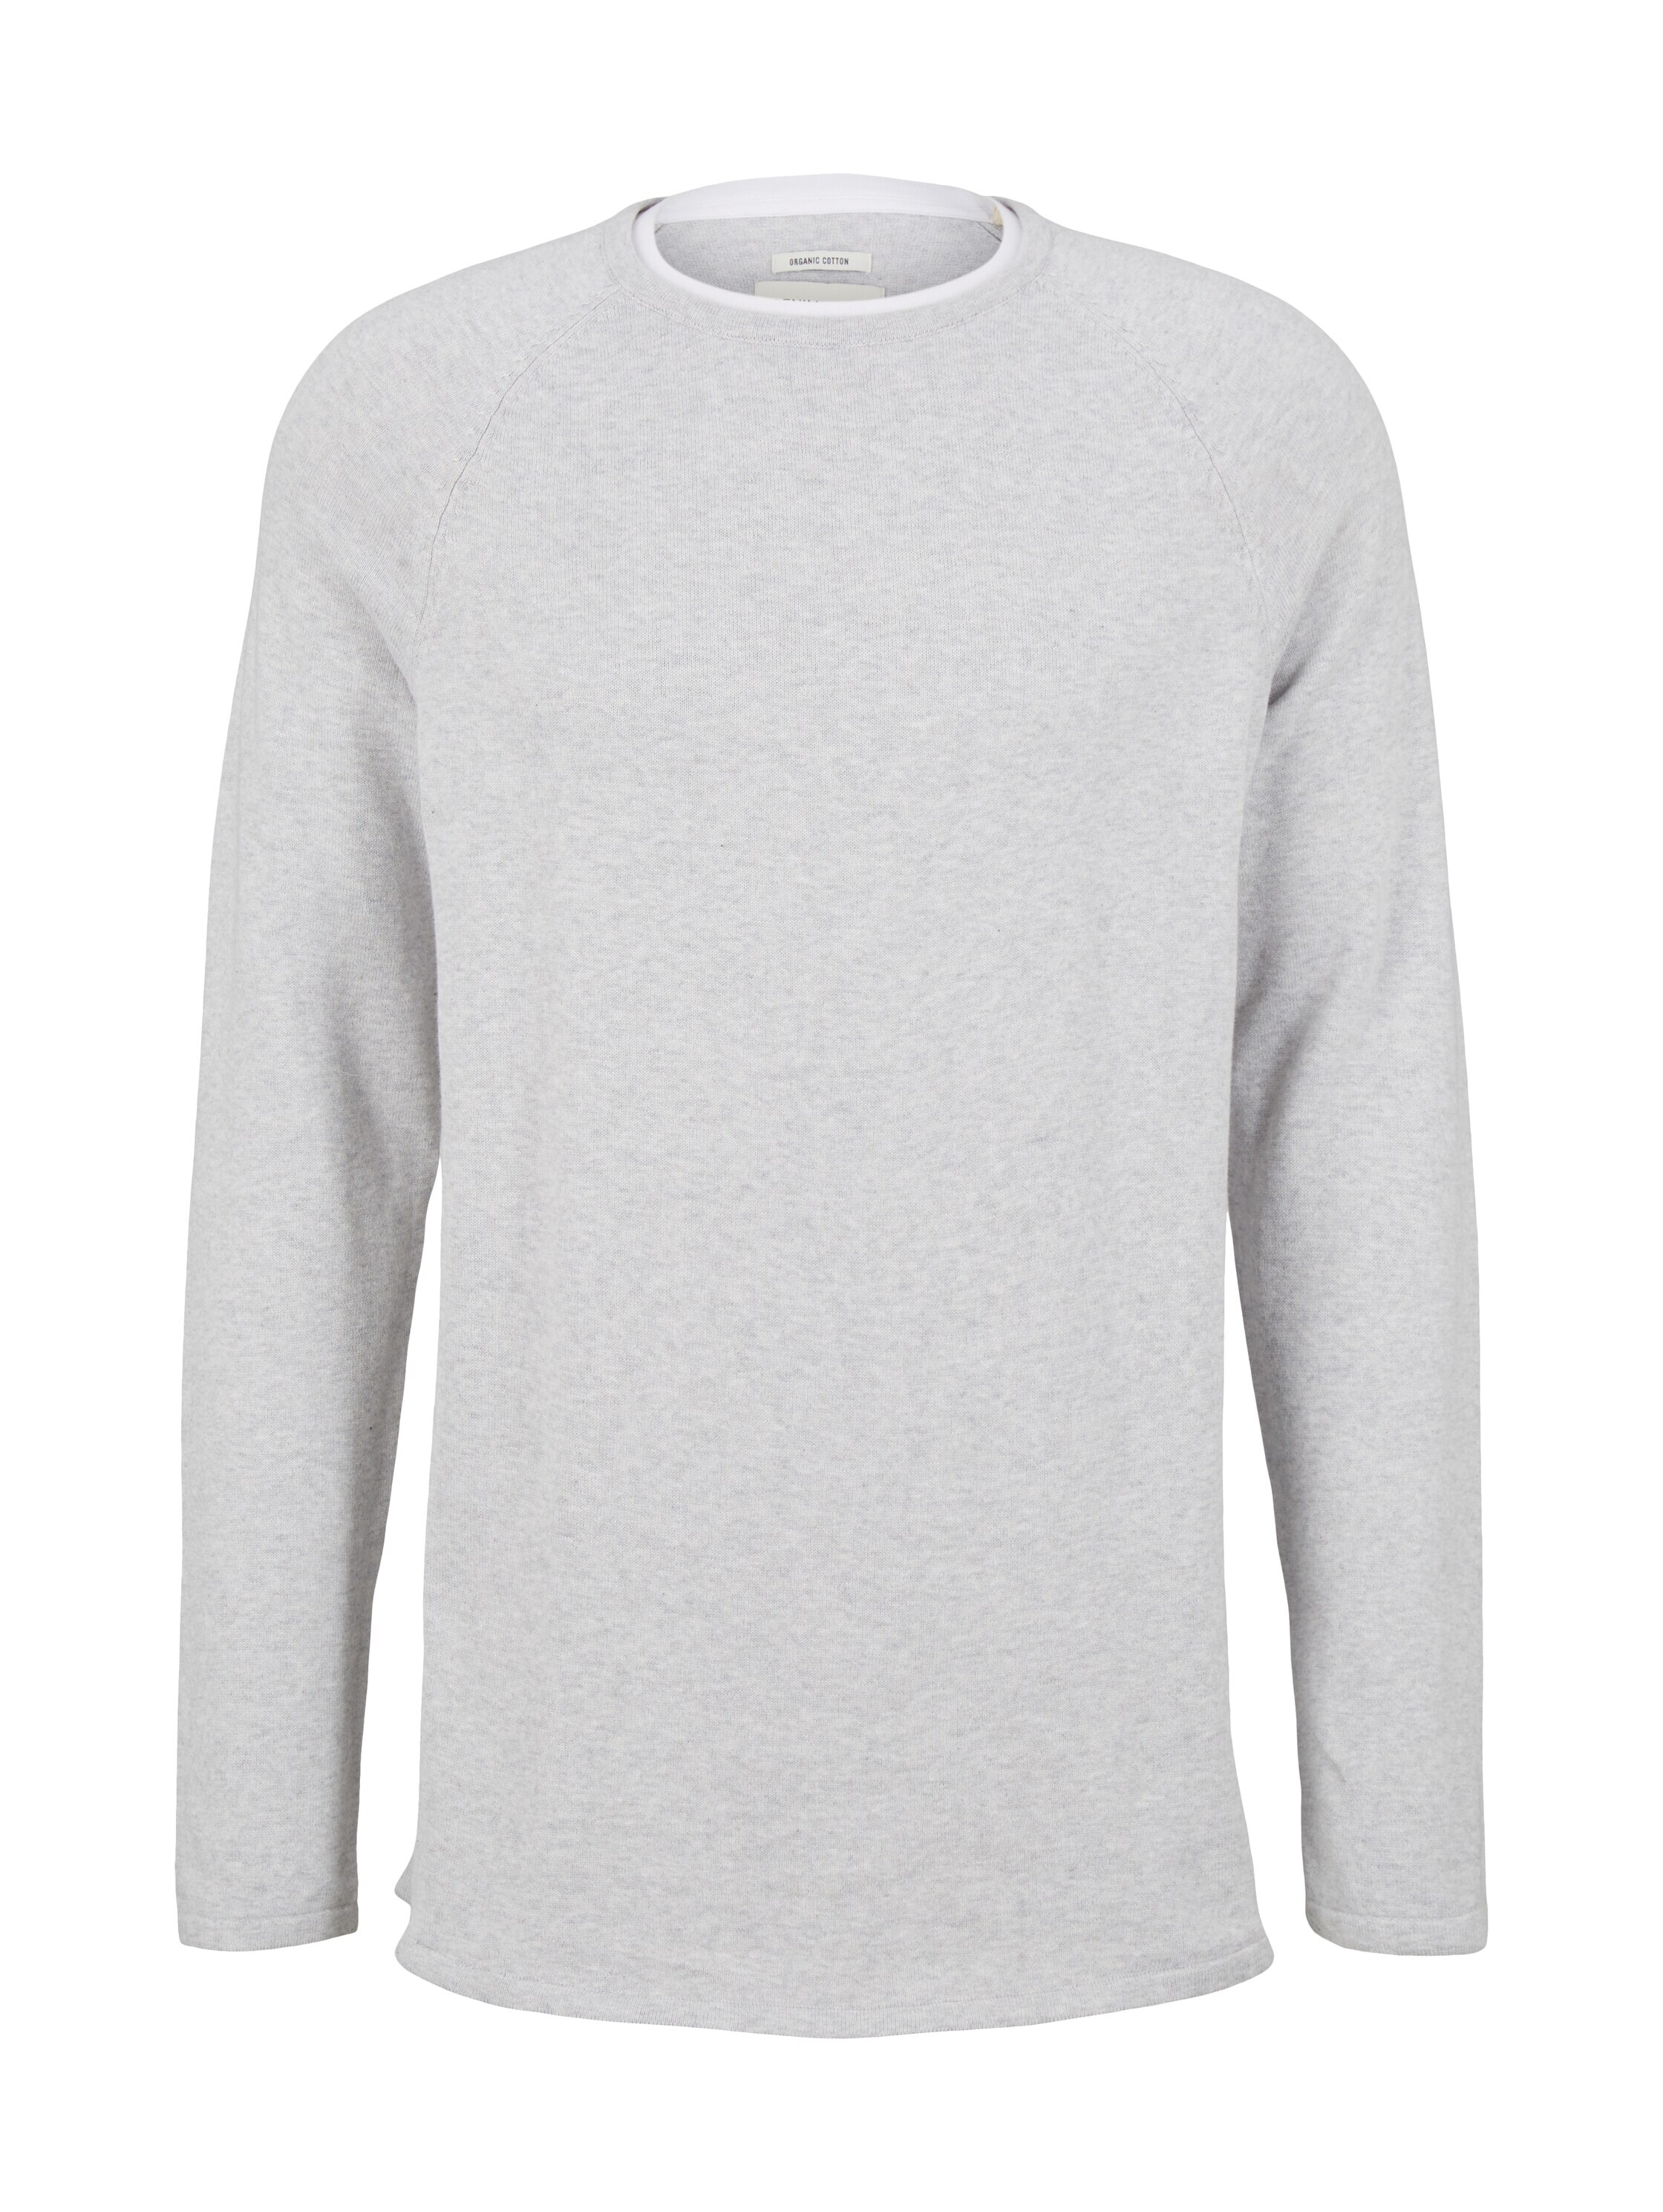 Пуловер Tom Tailor, серый пуловер tom tailor размер l серый